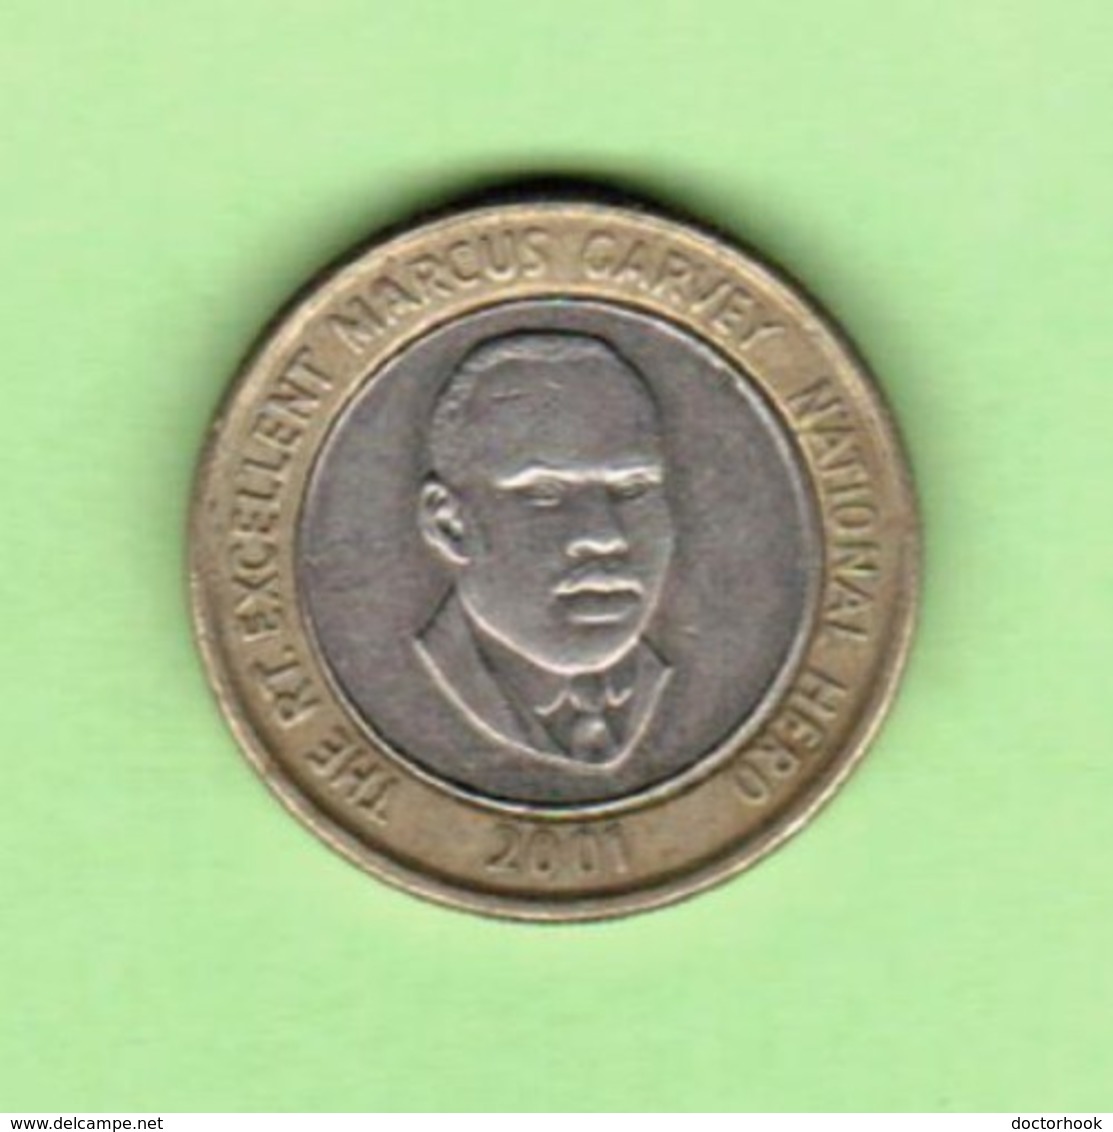 JAMAICA   $20.00 DOLLARS 2001  (KM # 182) #5205 - Jamaica